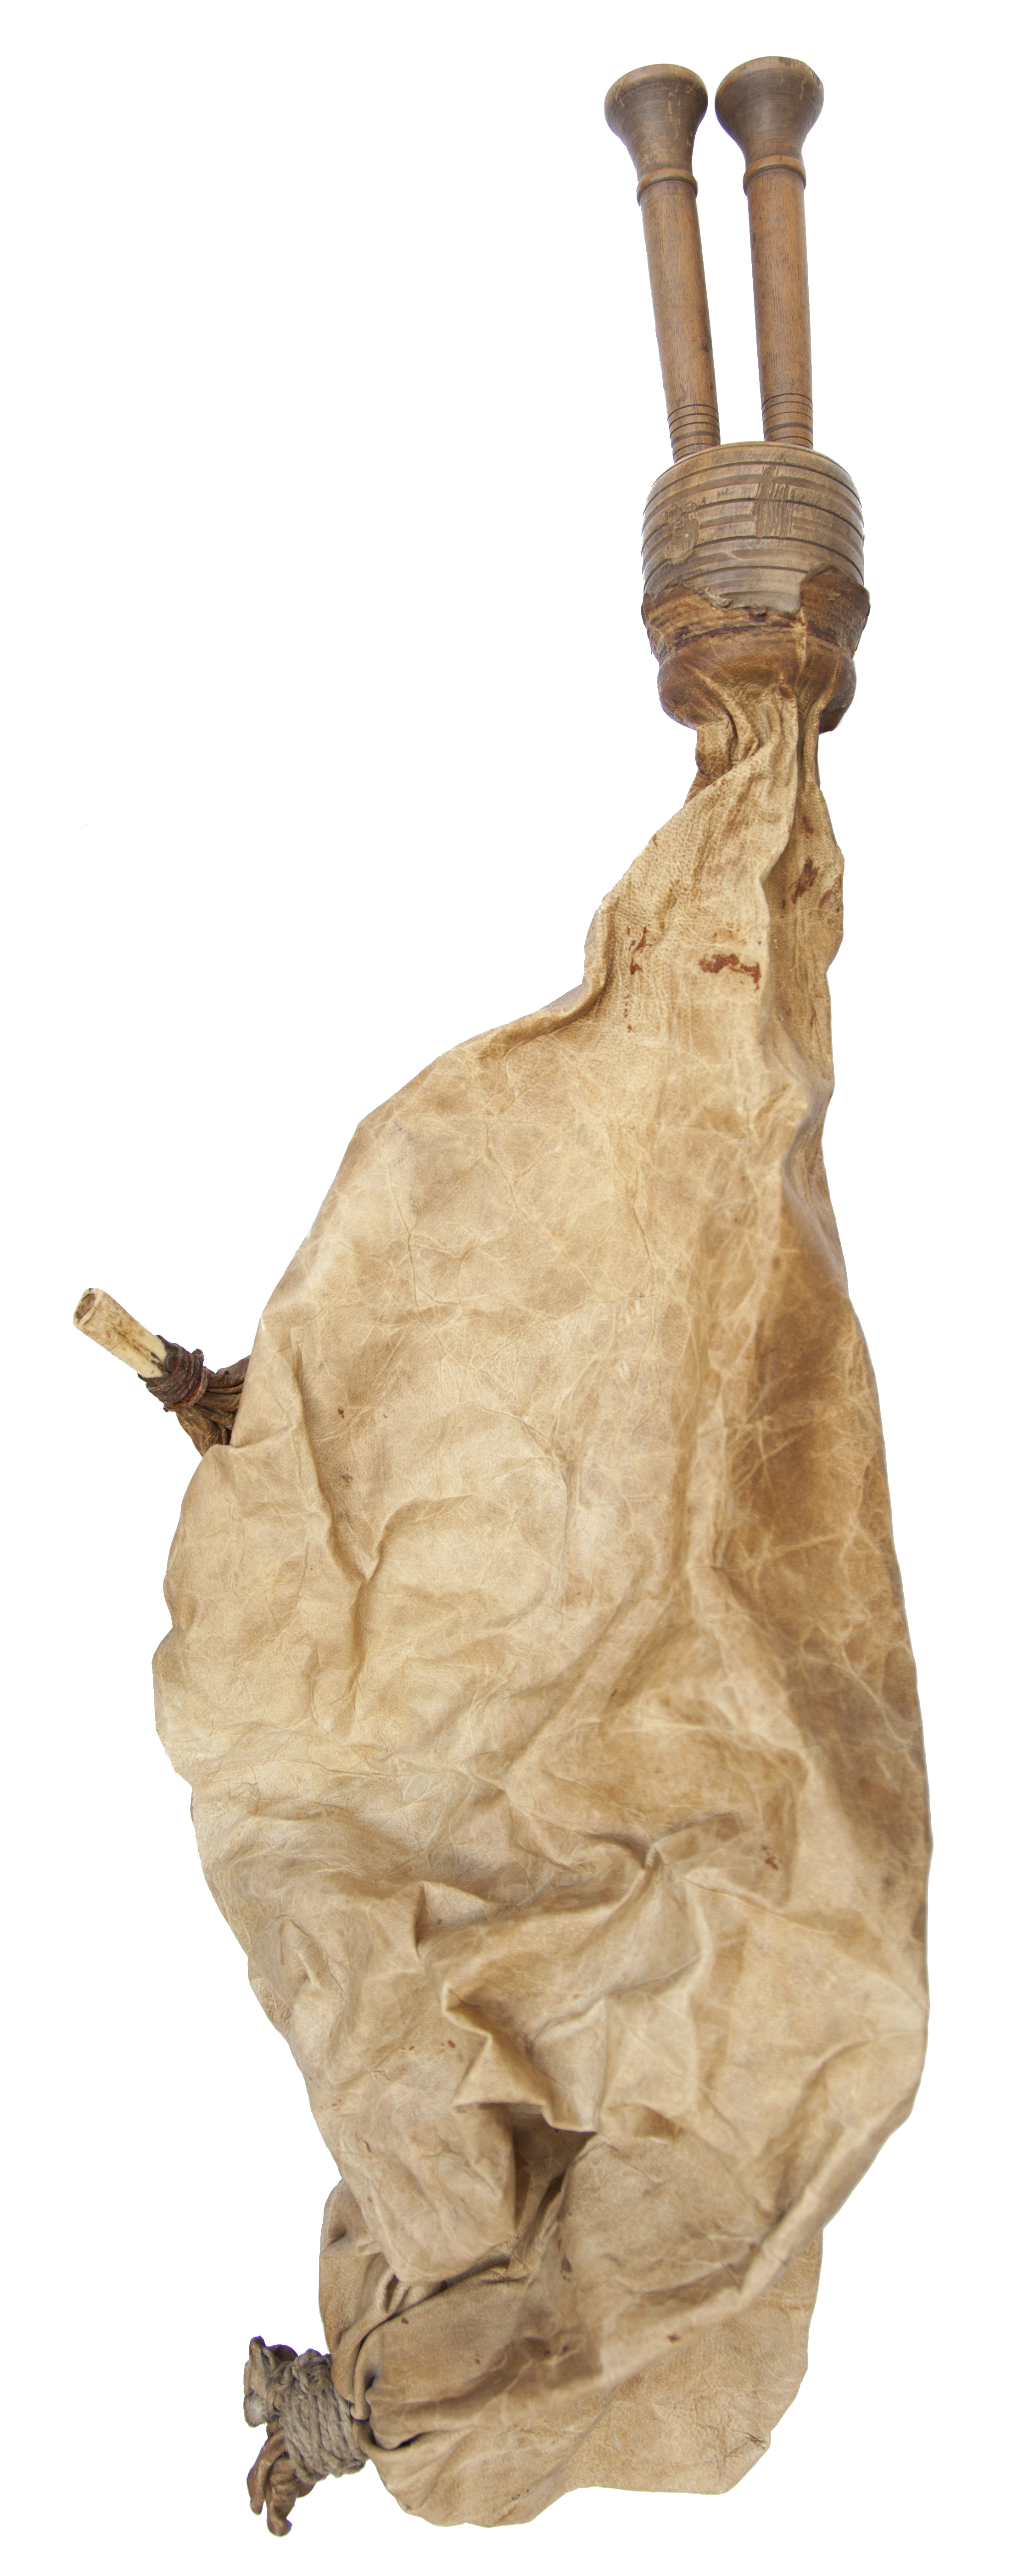 Šurle with the bag (Pive)